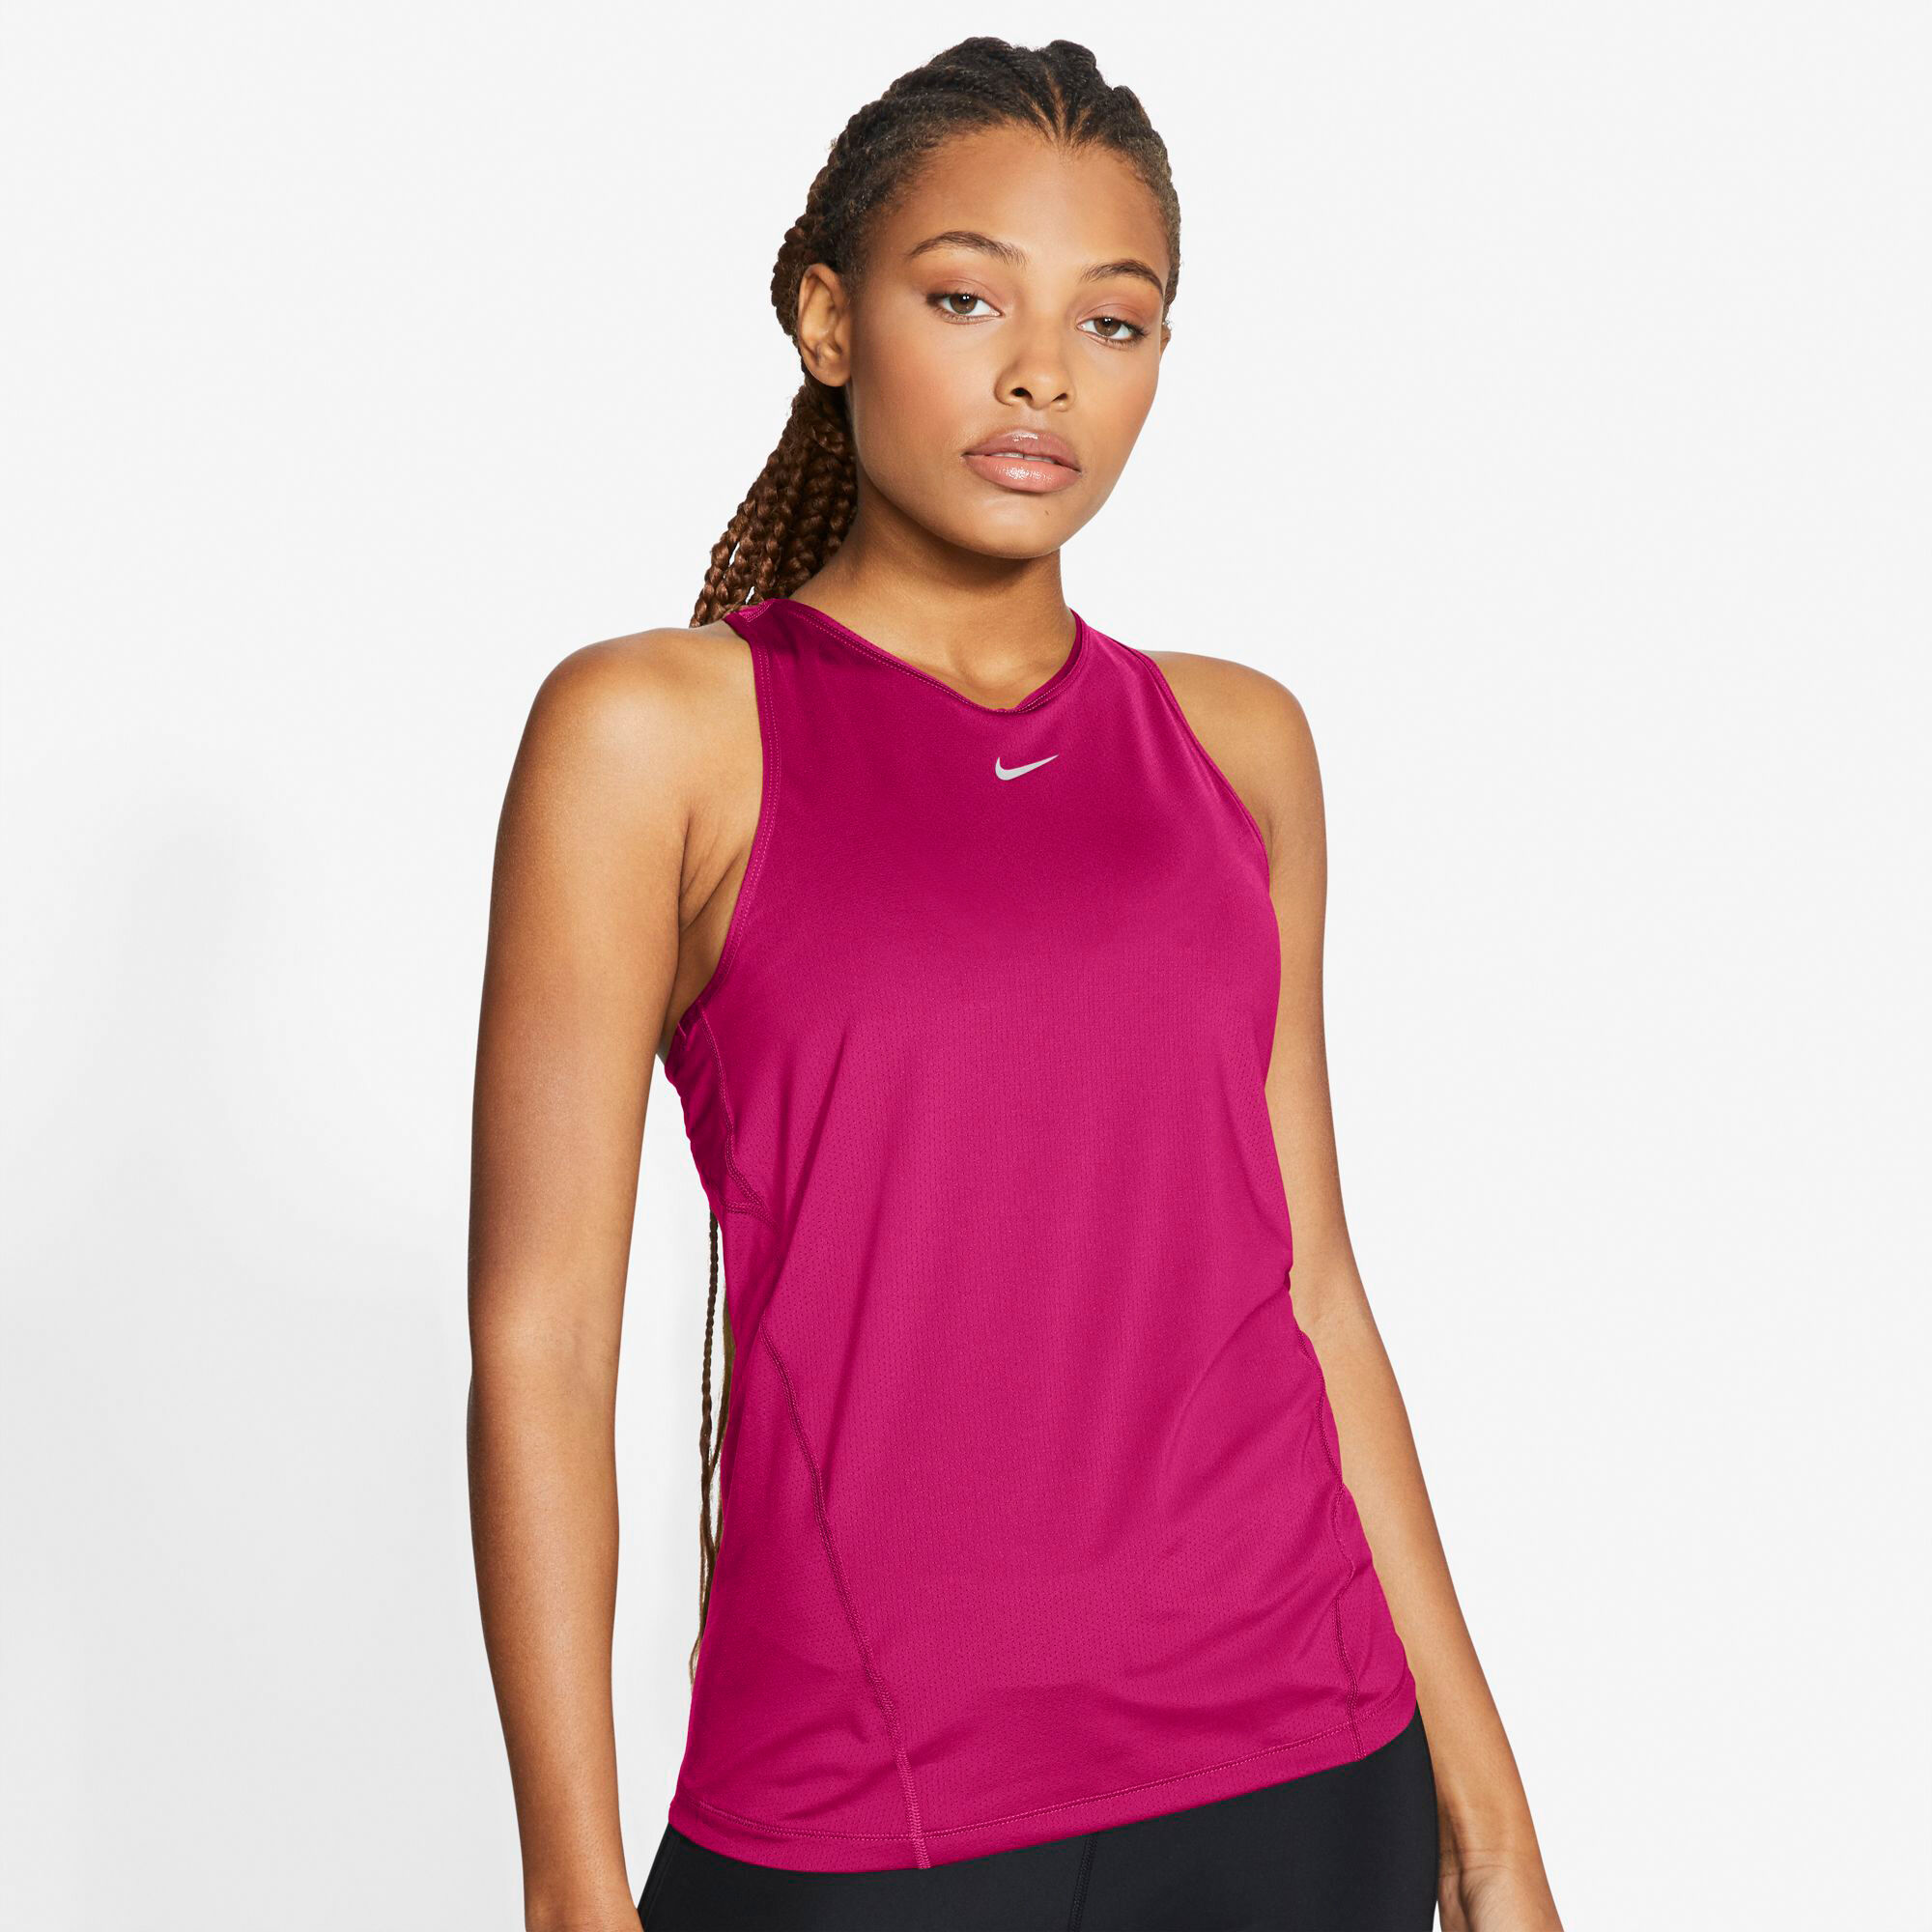 buy Nike Pro Tank Top Women - Pink online | Tennis-Point